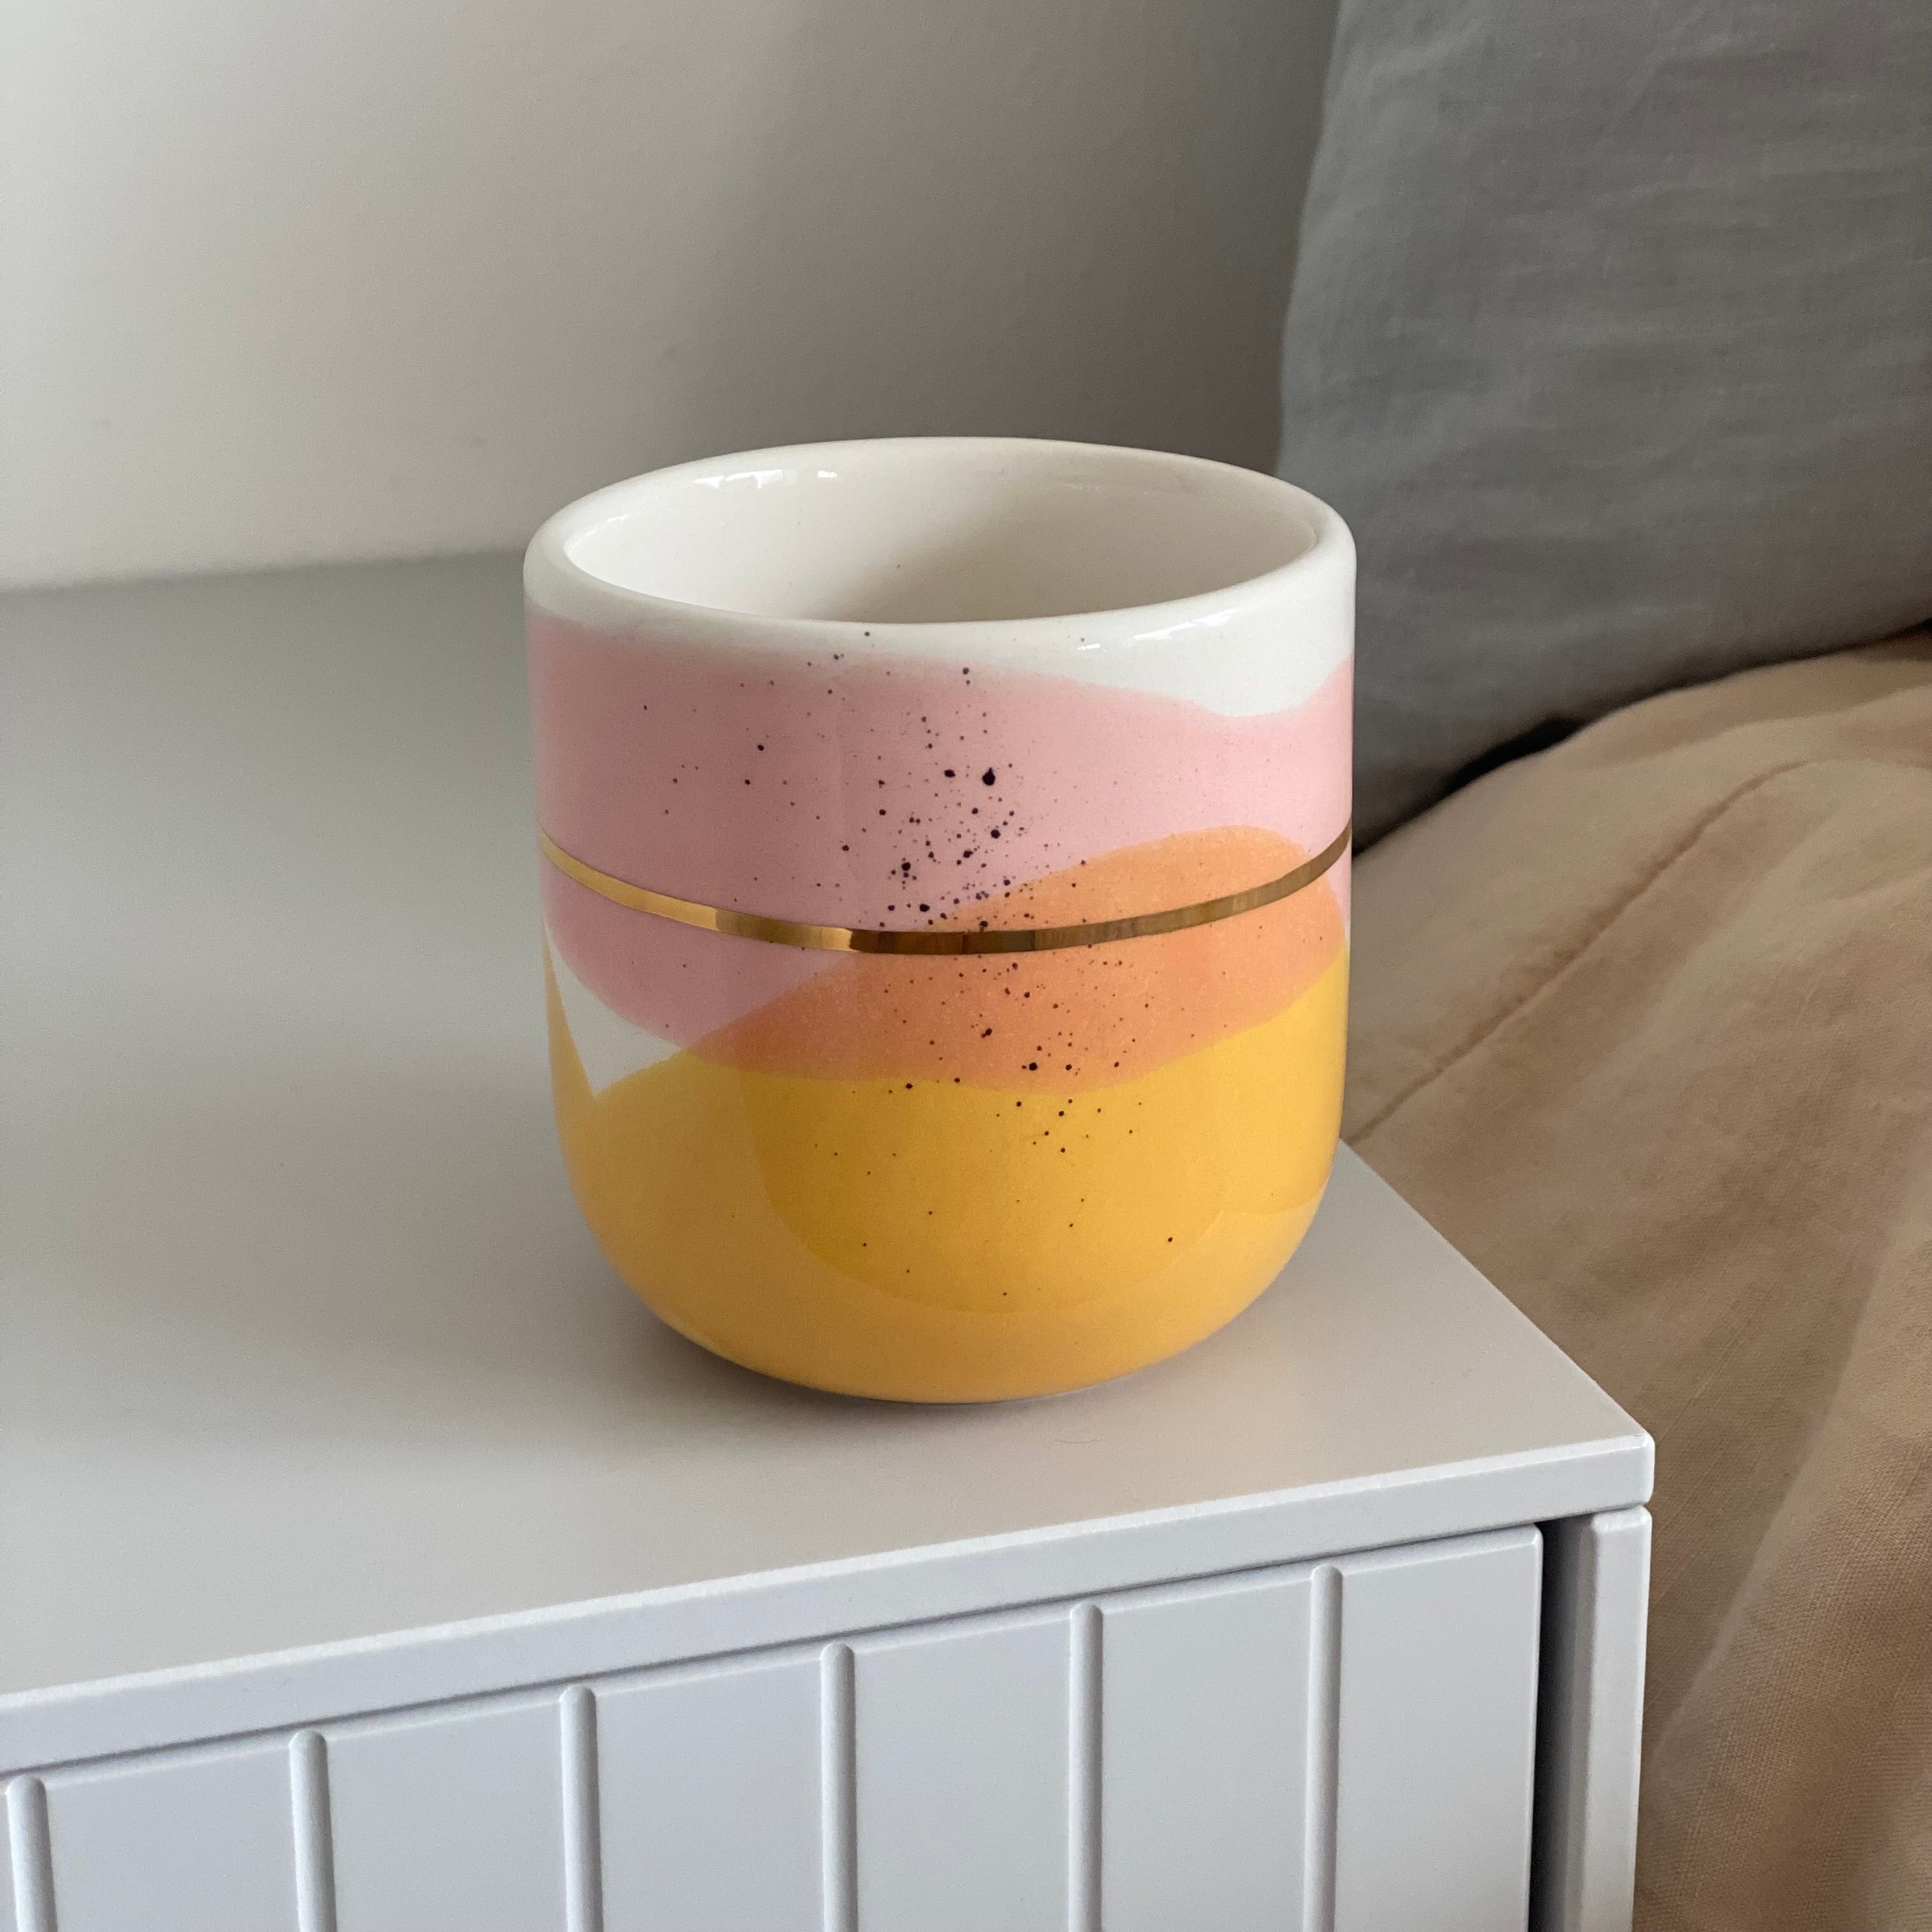 Marinski Heartmades latte kop Landscape - warm yellow og coral pink